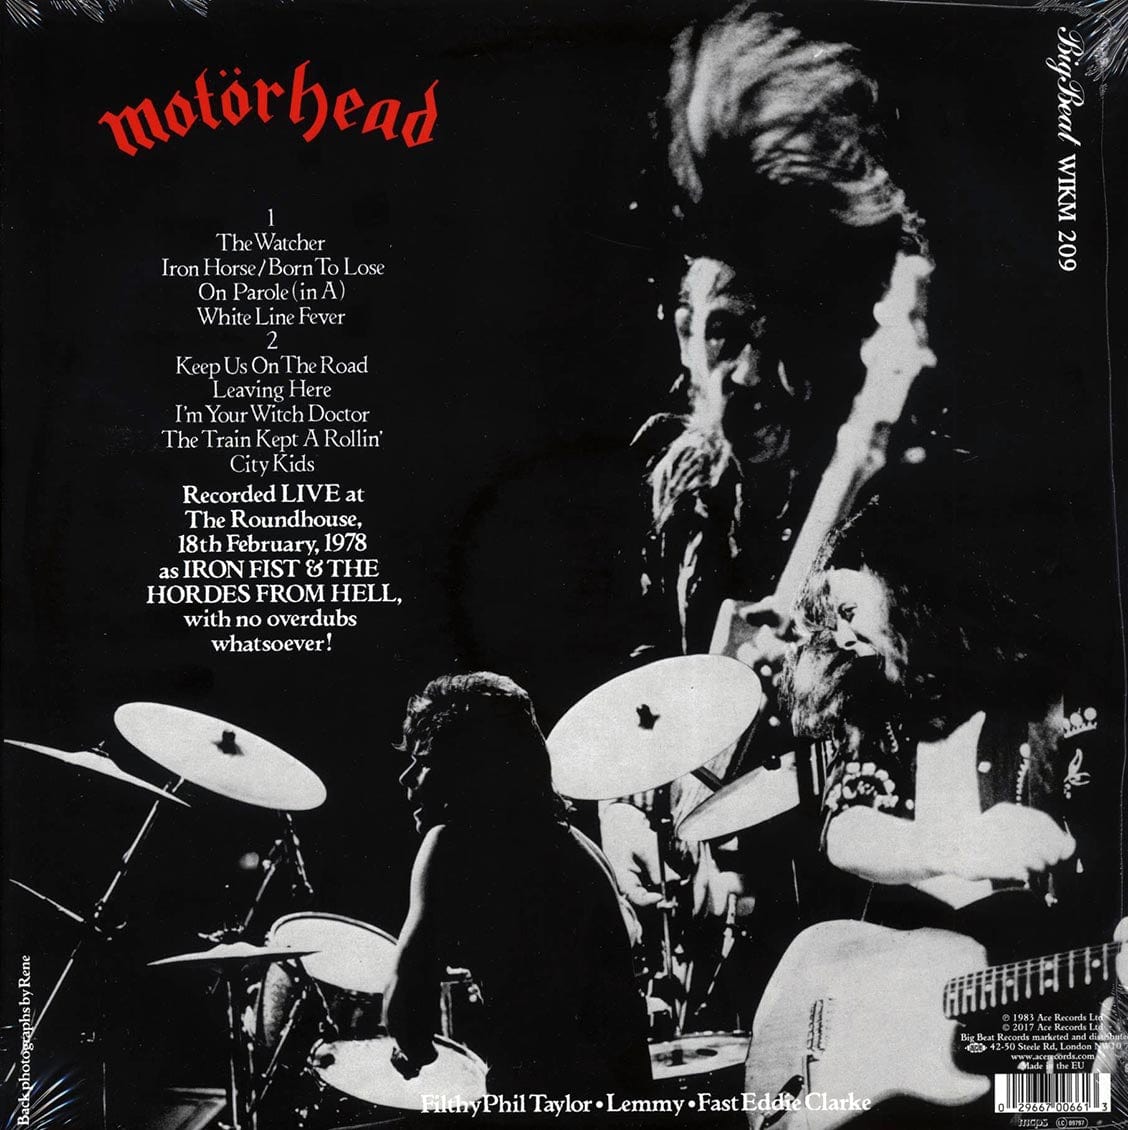 Lp Motörhead ‎– Iron Fist - Vinil records